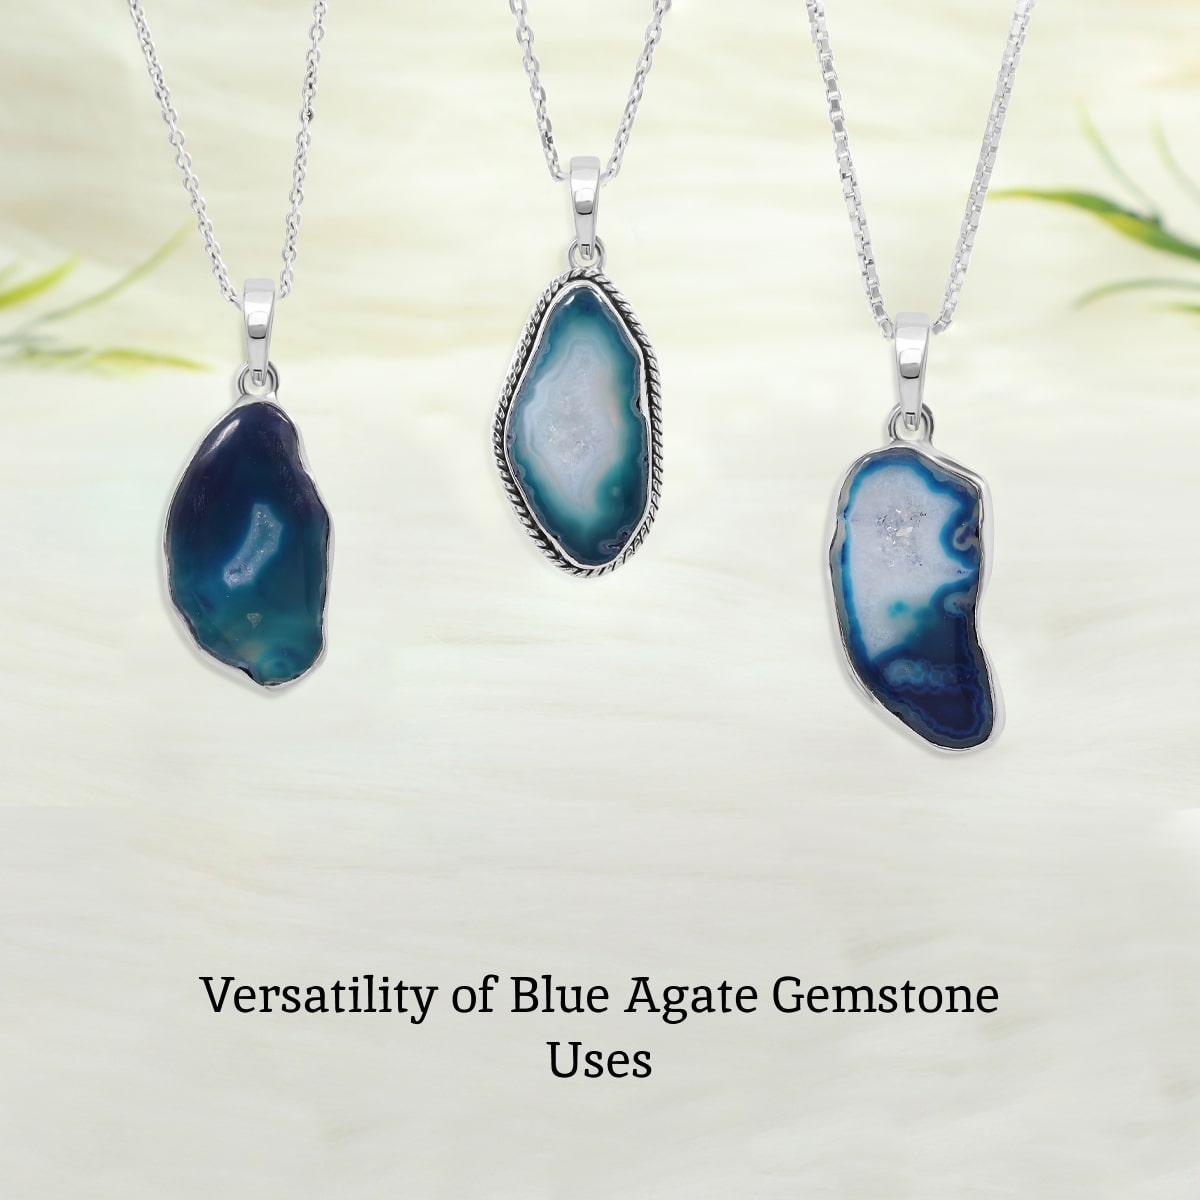 Uses of Blue Agate Gemstone